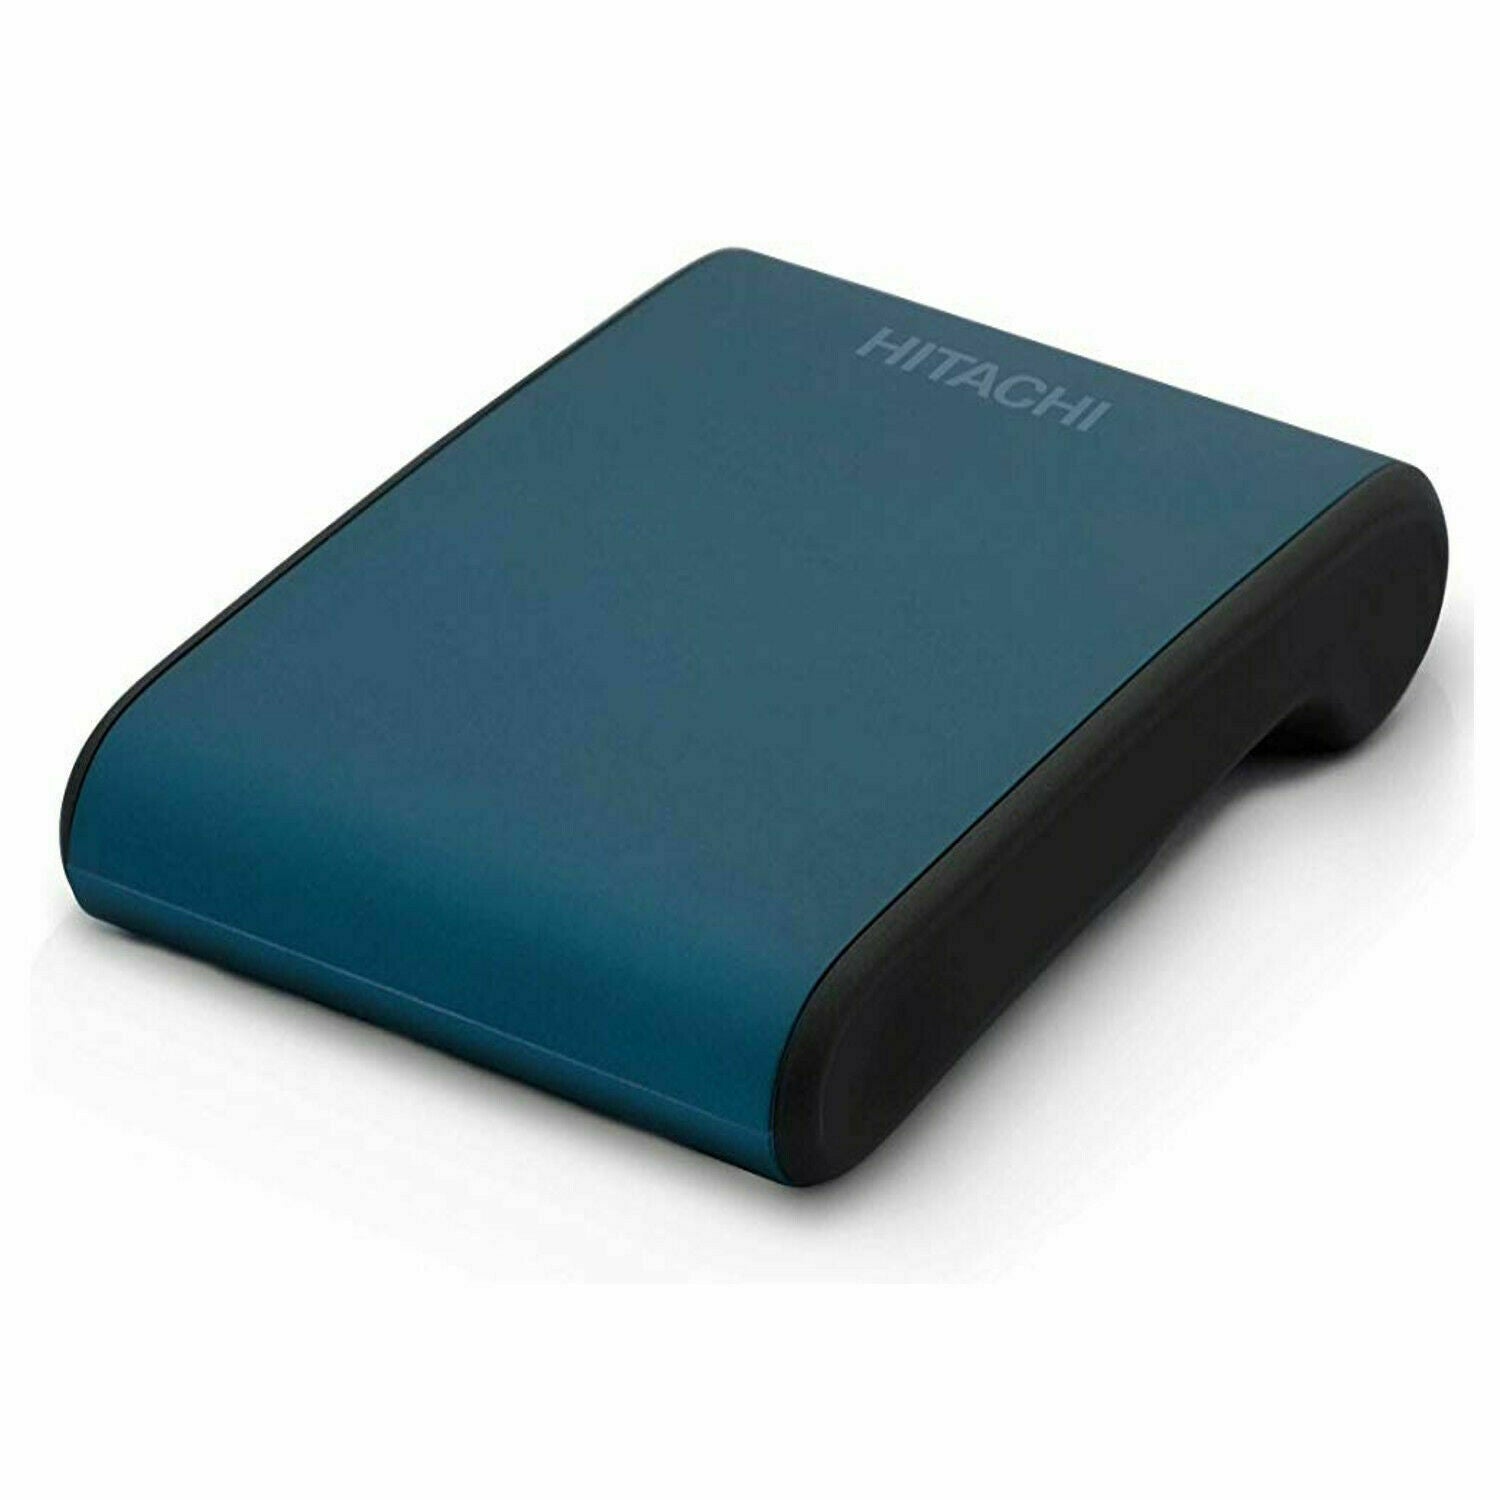 Hitachi SimpleDrive 2.5" Portable External Hard Drive 500GB USB 2.0 HDD for PC